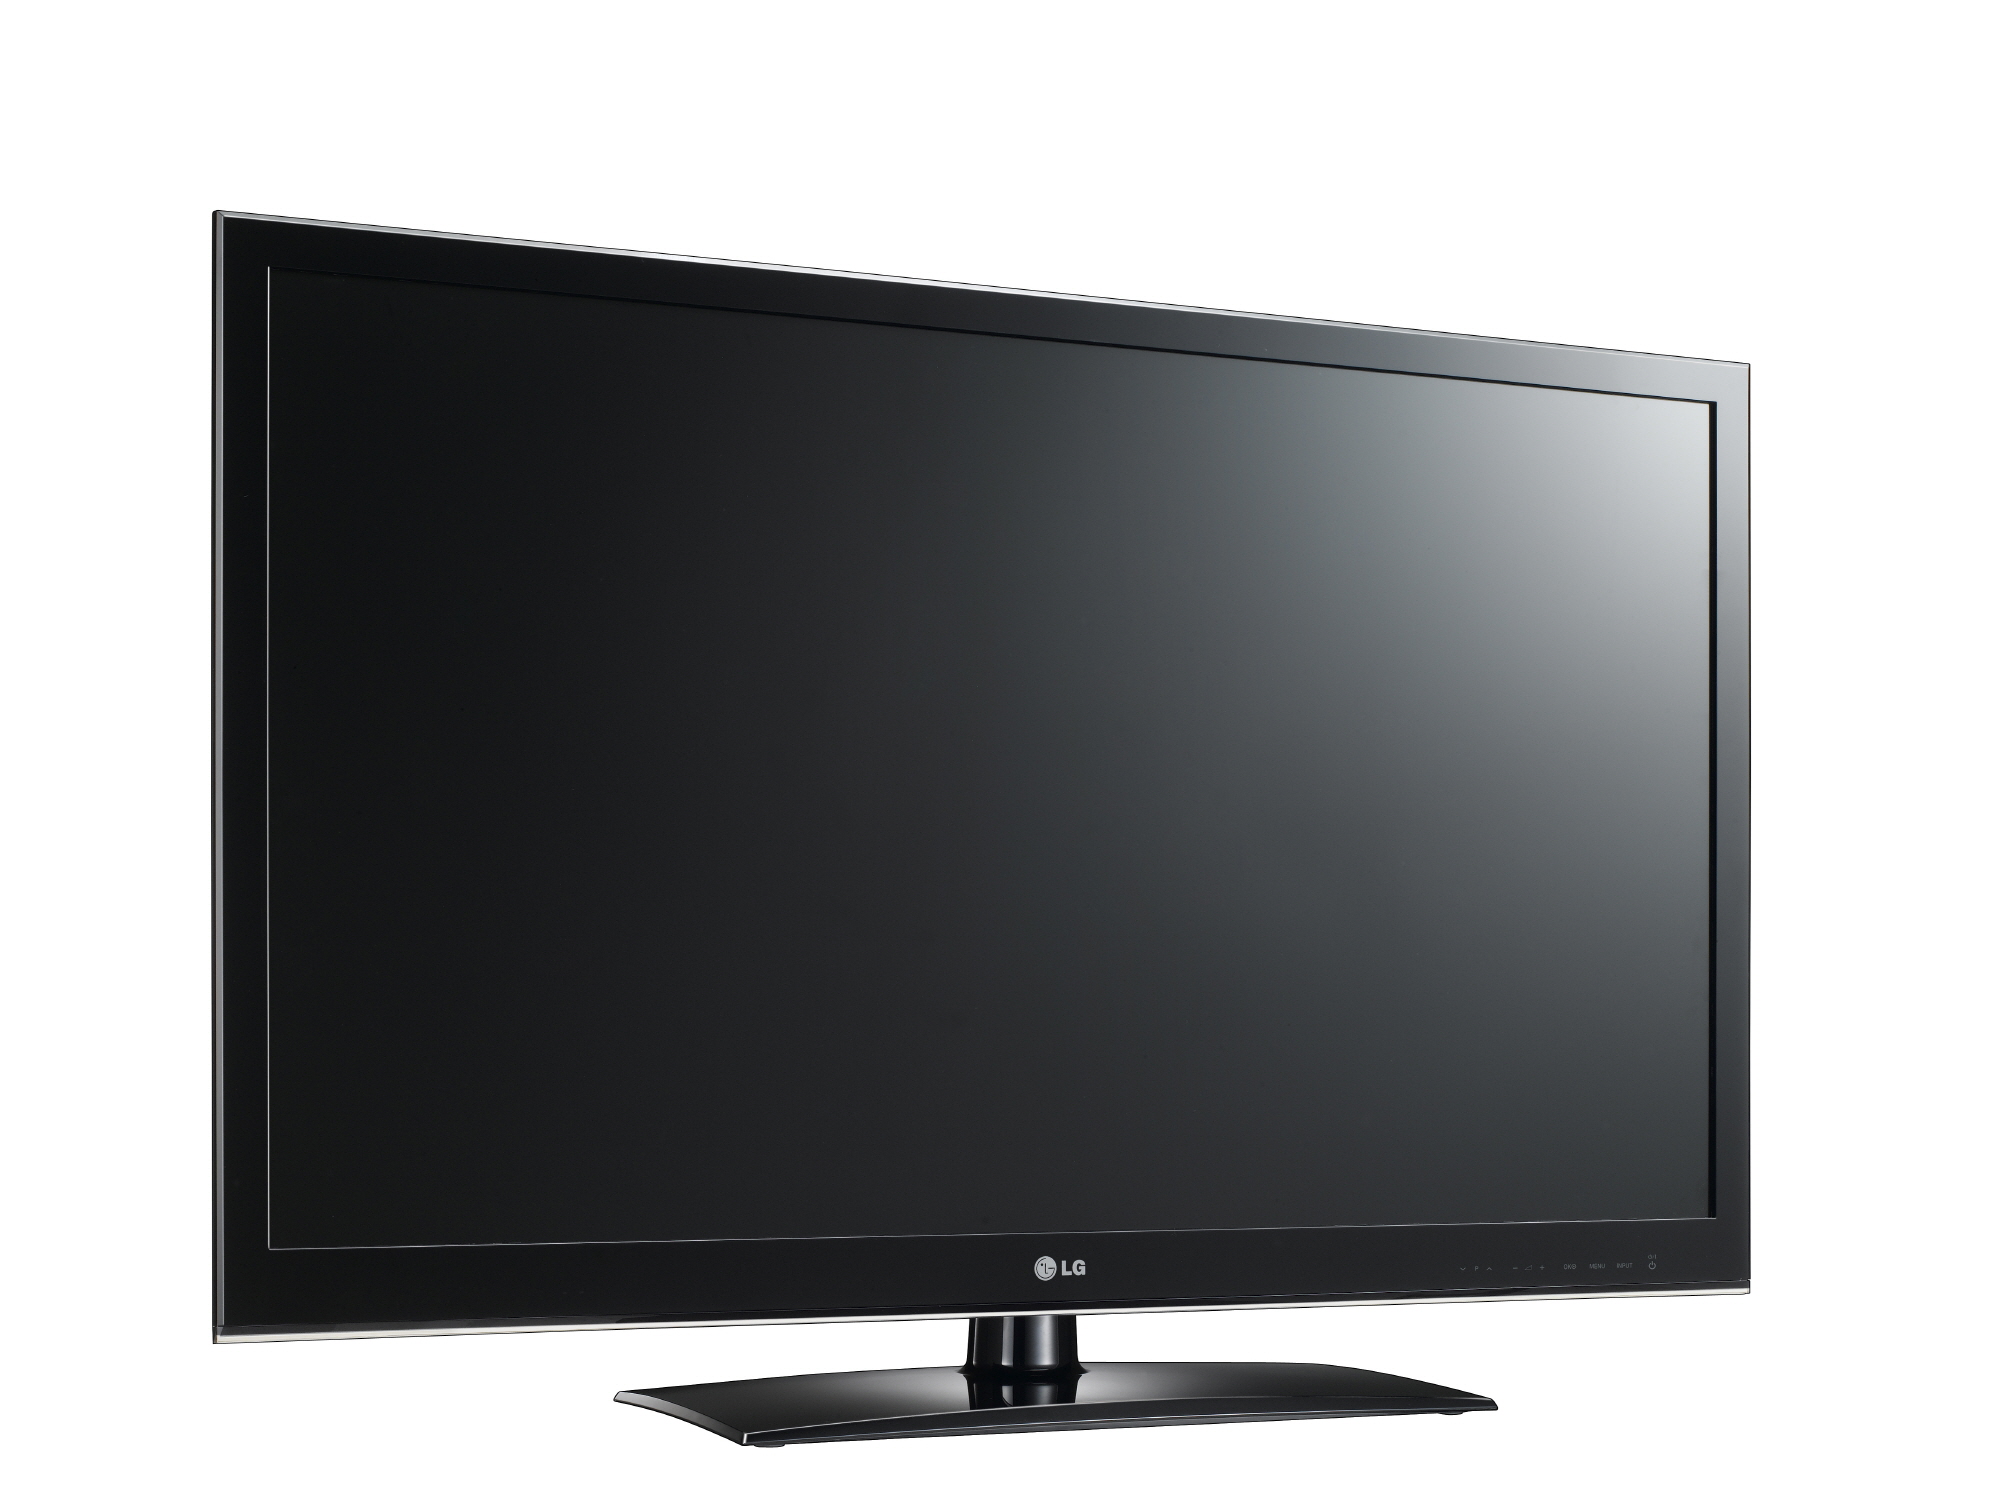 Телевизор lg екатеринбург. Телевизор LG 32lv3500. LG 42lv4500. Телевизор LG 106см. LG 42ld550.